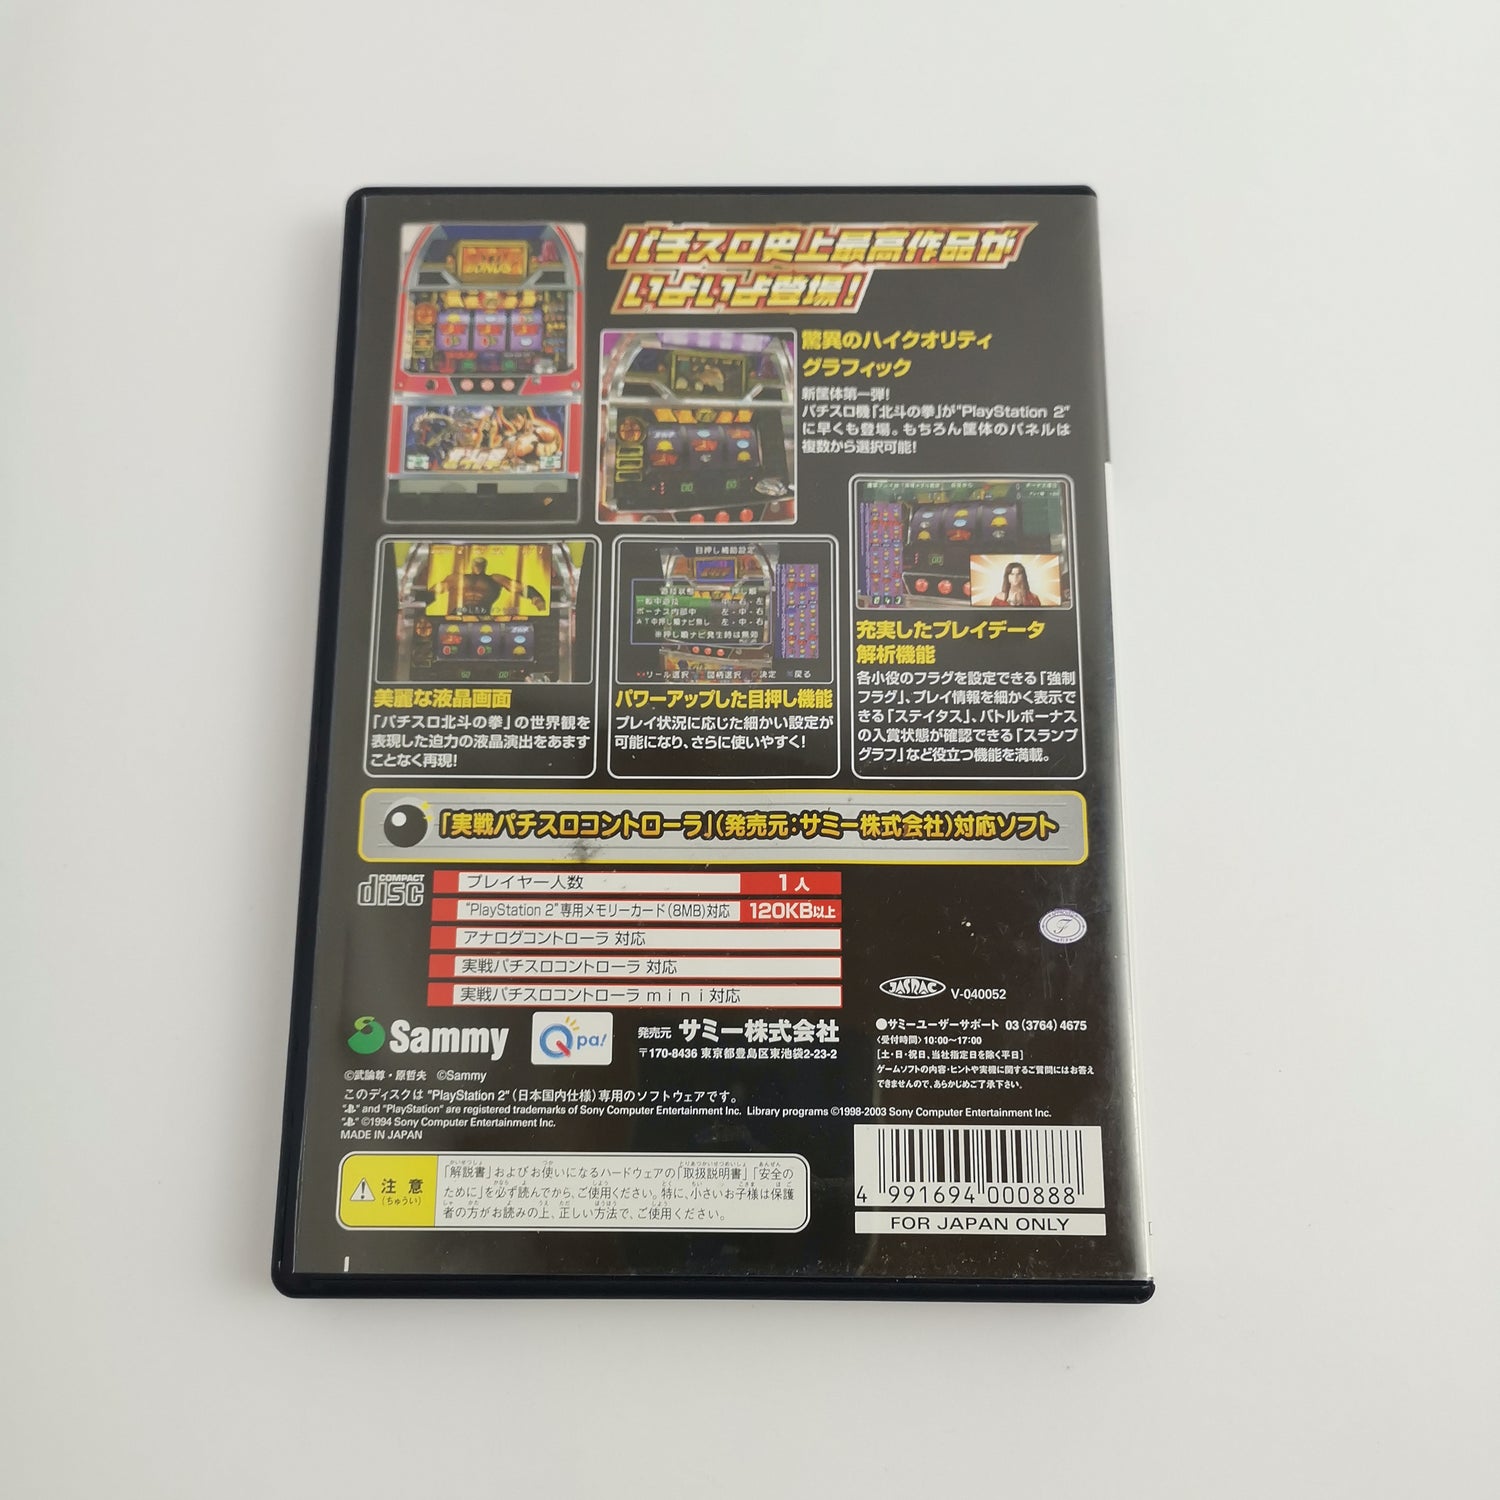 Sony Playstation 2 Game : Hokuto no Ken Jissen Pachislot Hisshouhou PS2 Japan